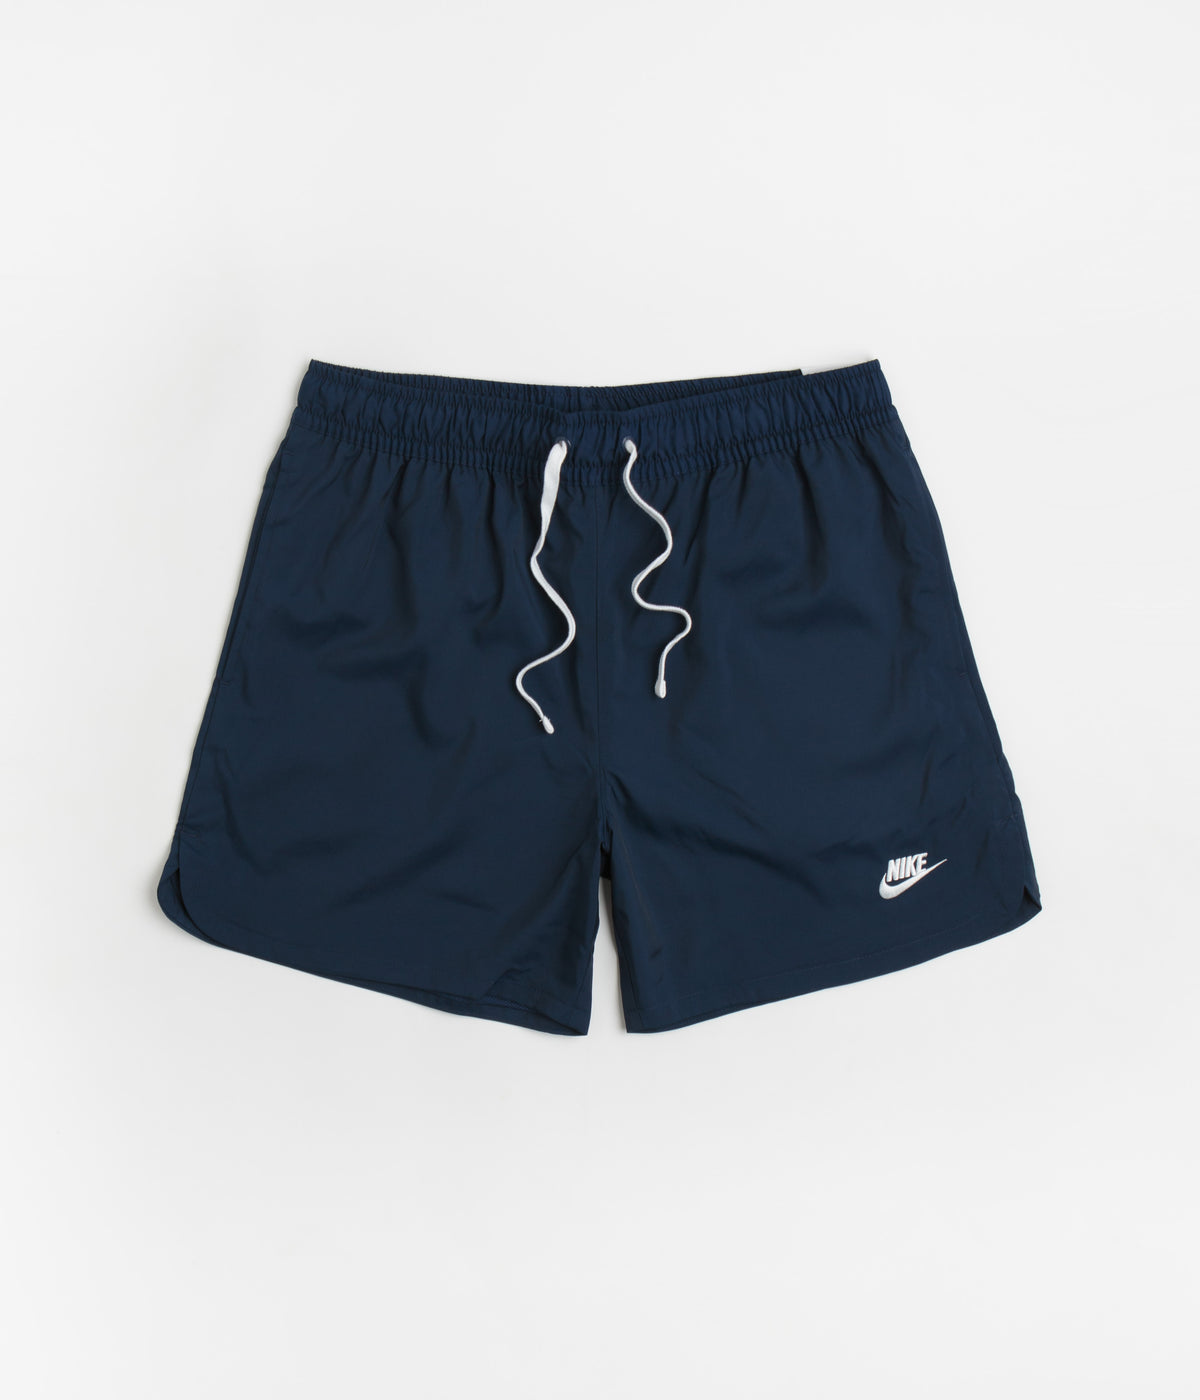 Nike Flow Shorts - Midnight Navy / White | Always in Colour